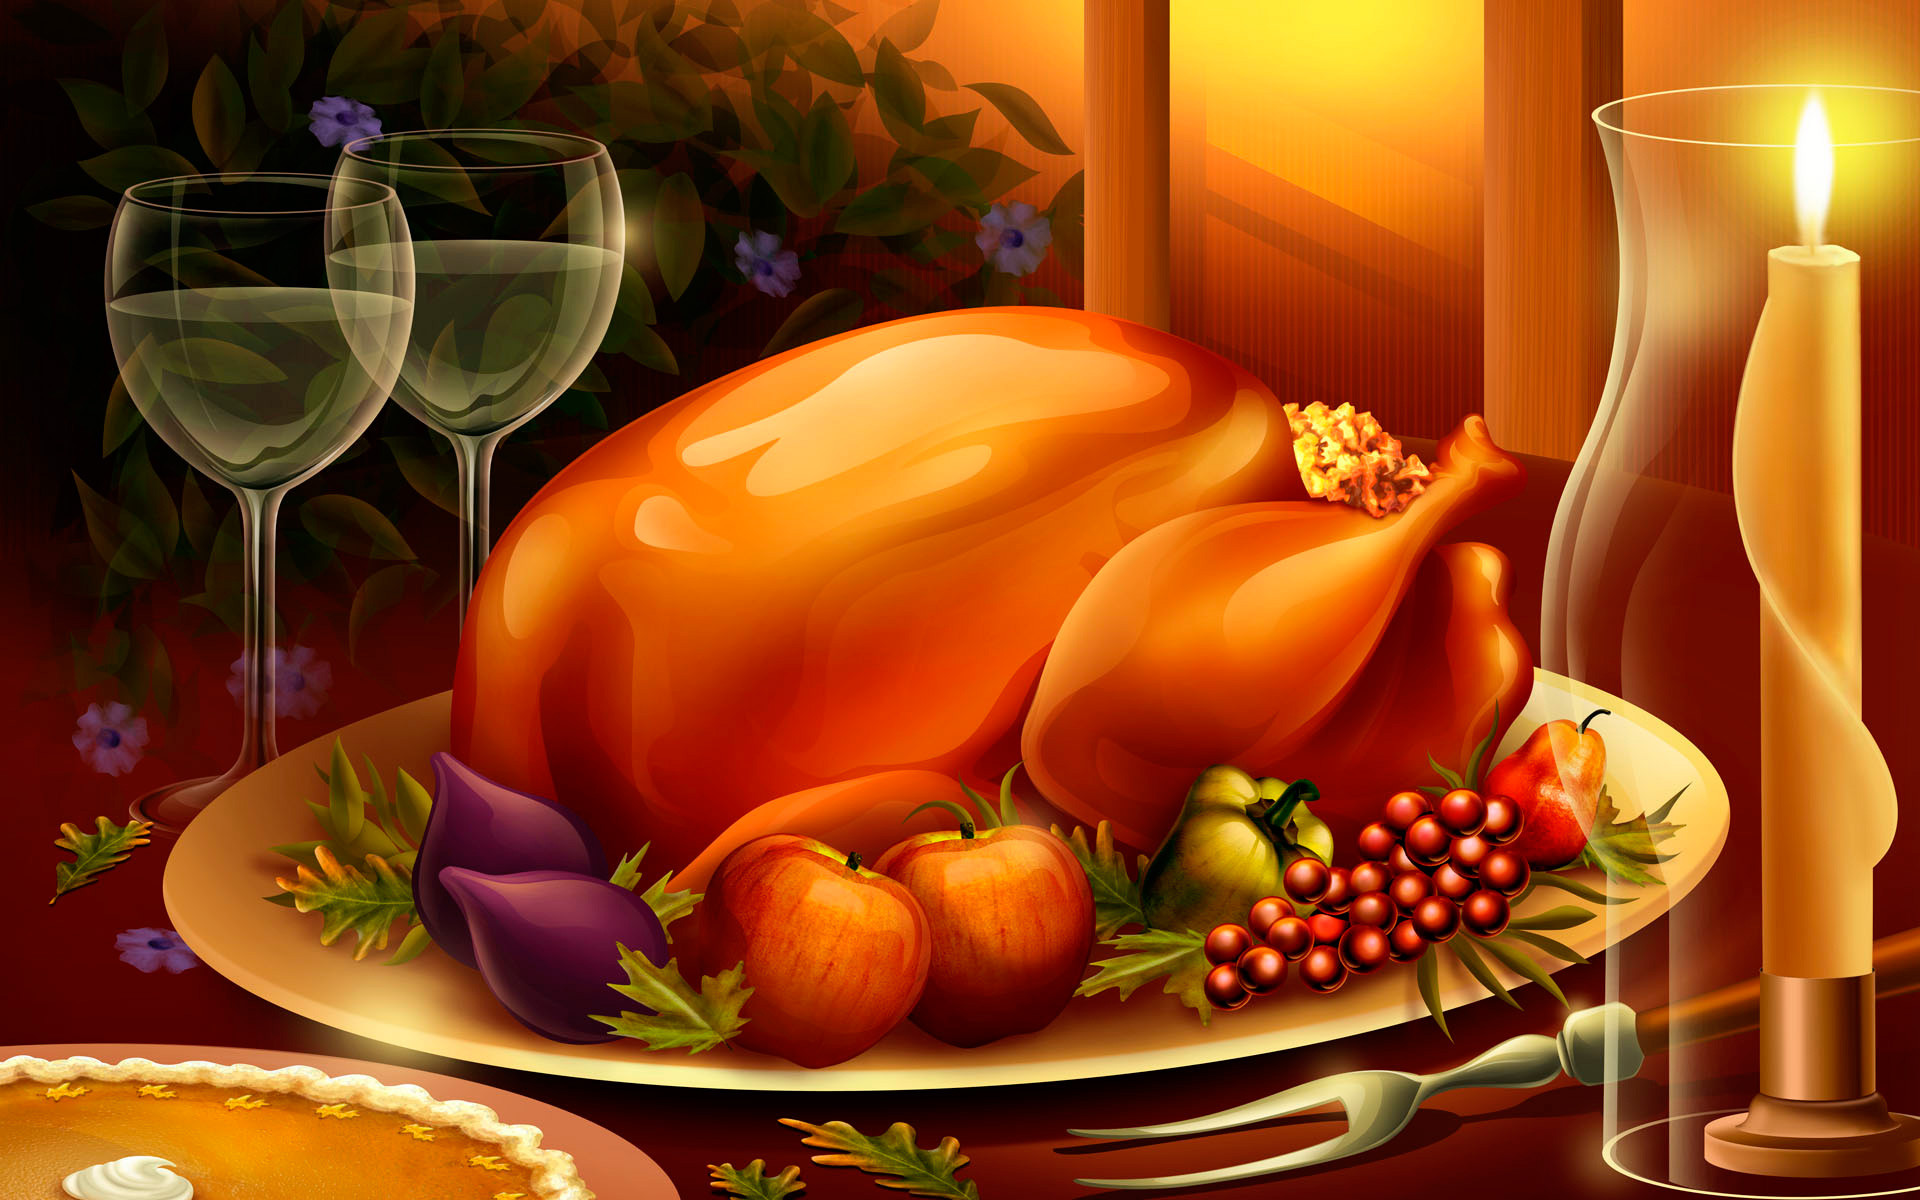 Thanksgiving 3D Wallpaper
 Thanksgiving Wallpaper Download Desktop Thanksgiving